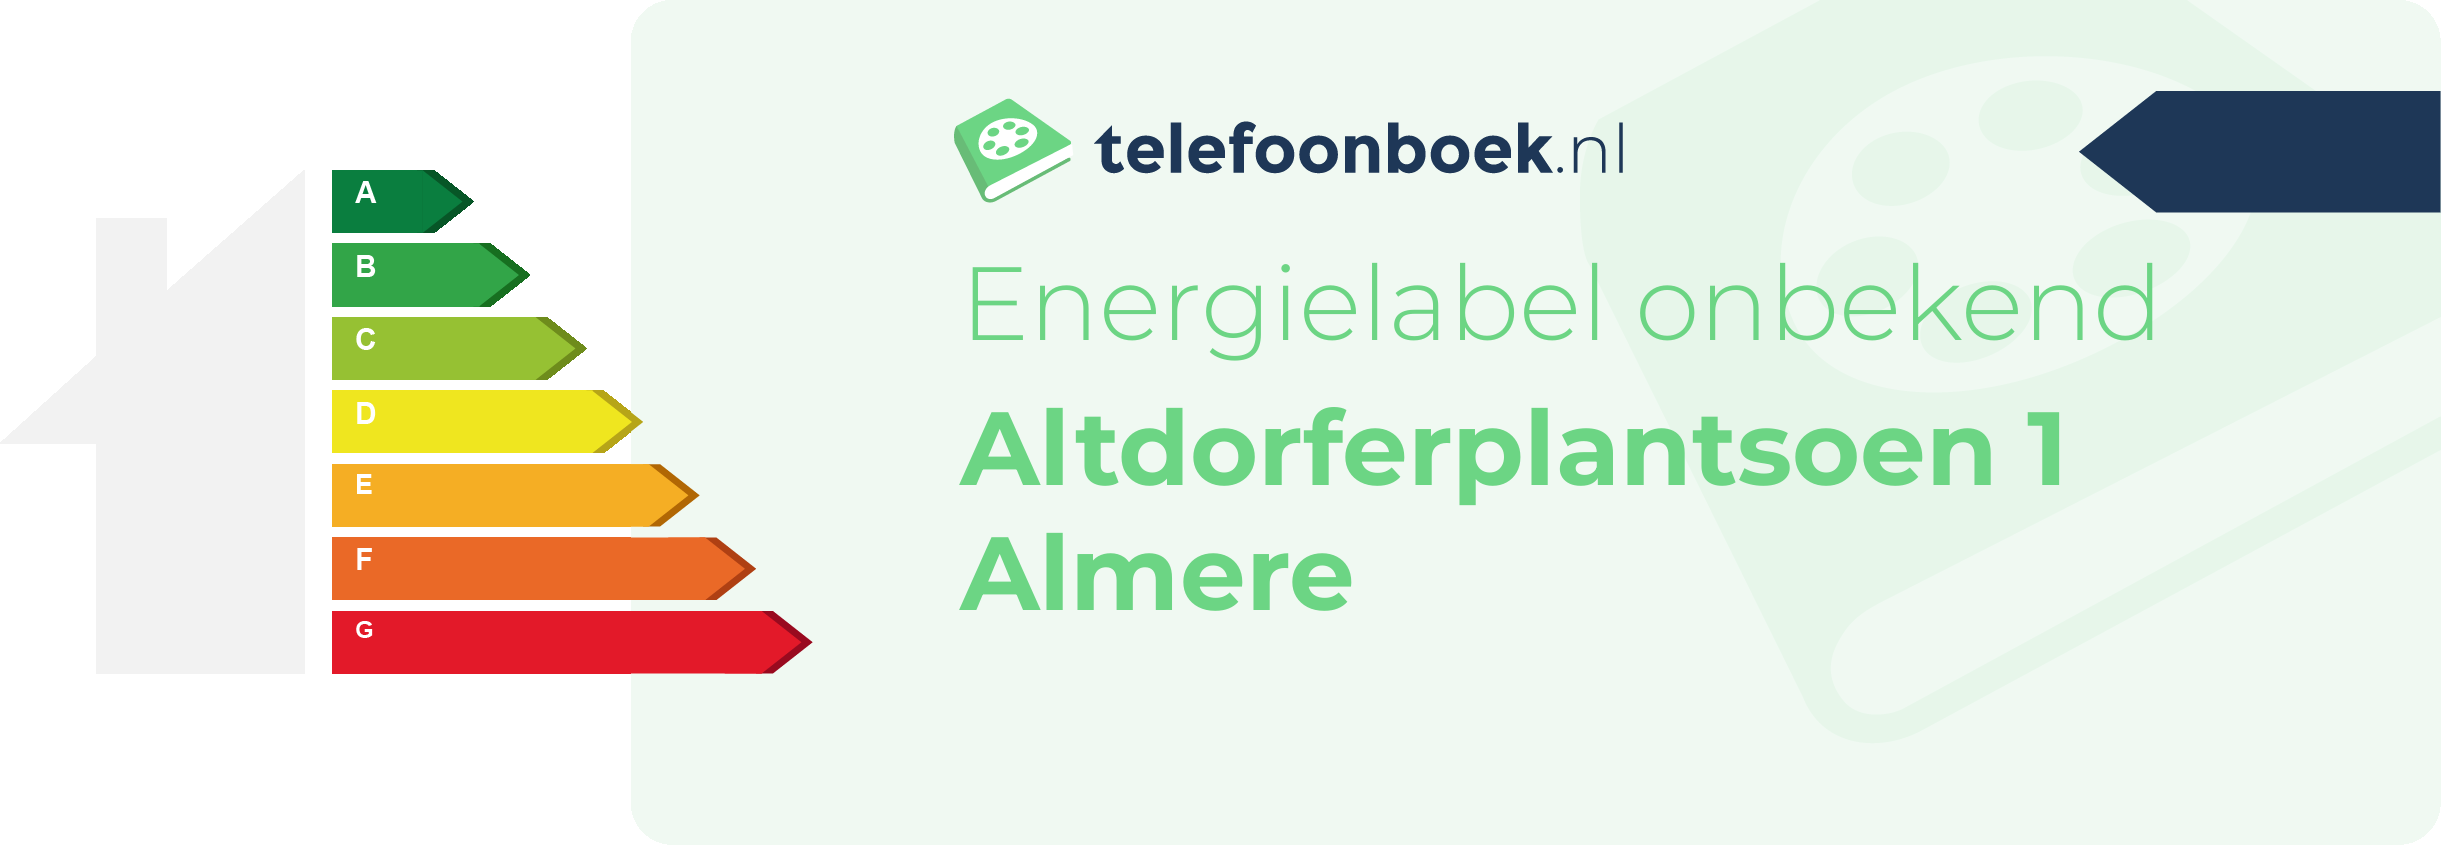 Energielabel Altdorferplantsoen 1 Almere